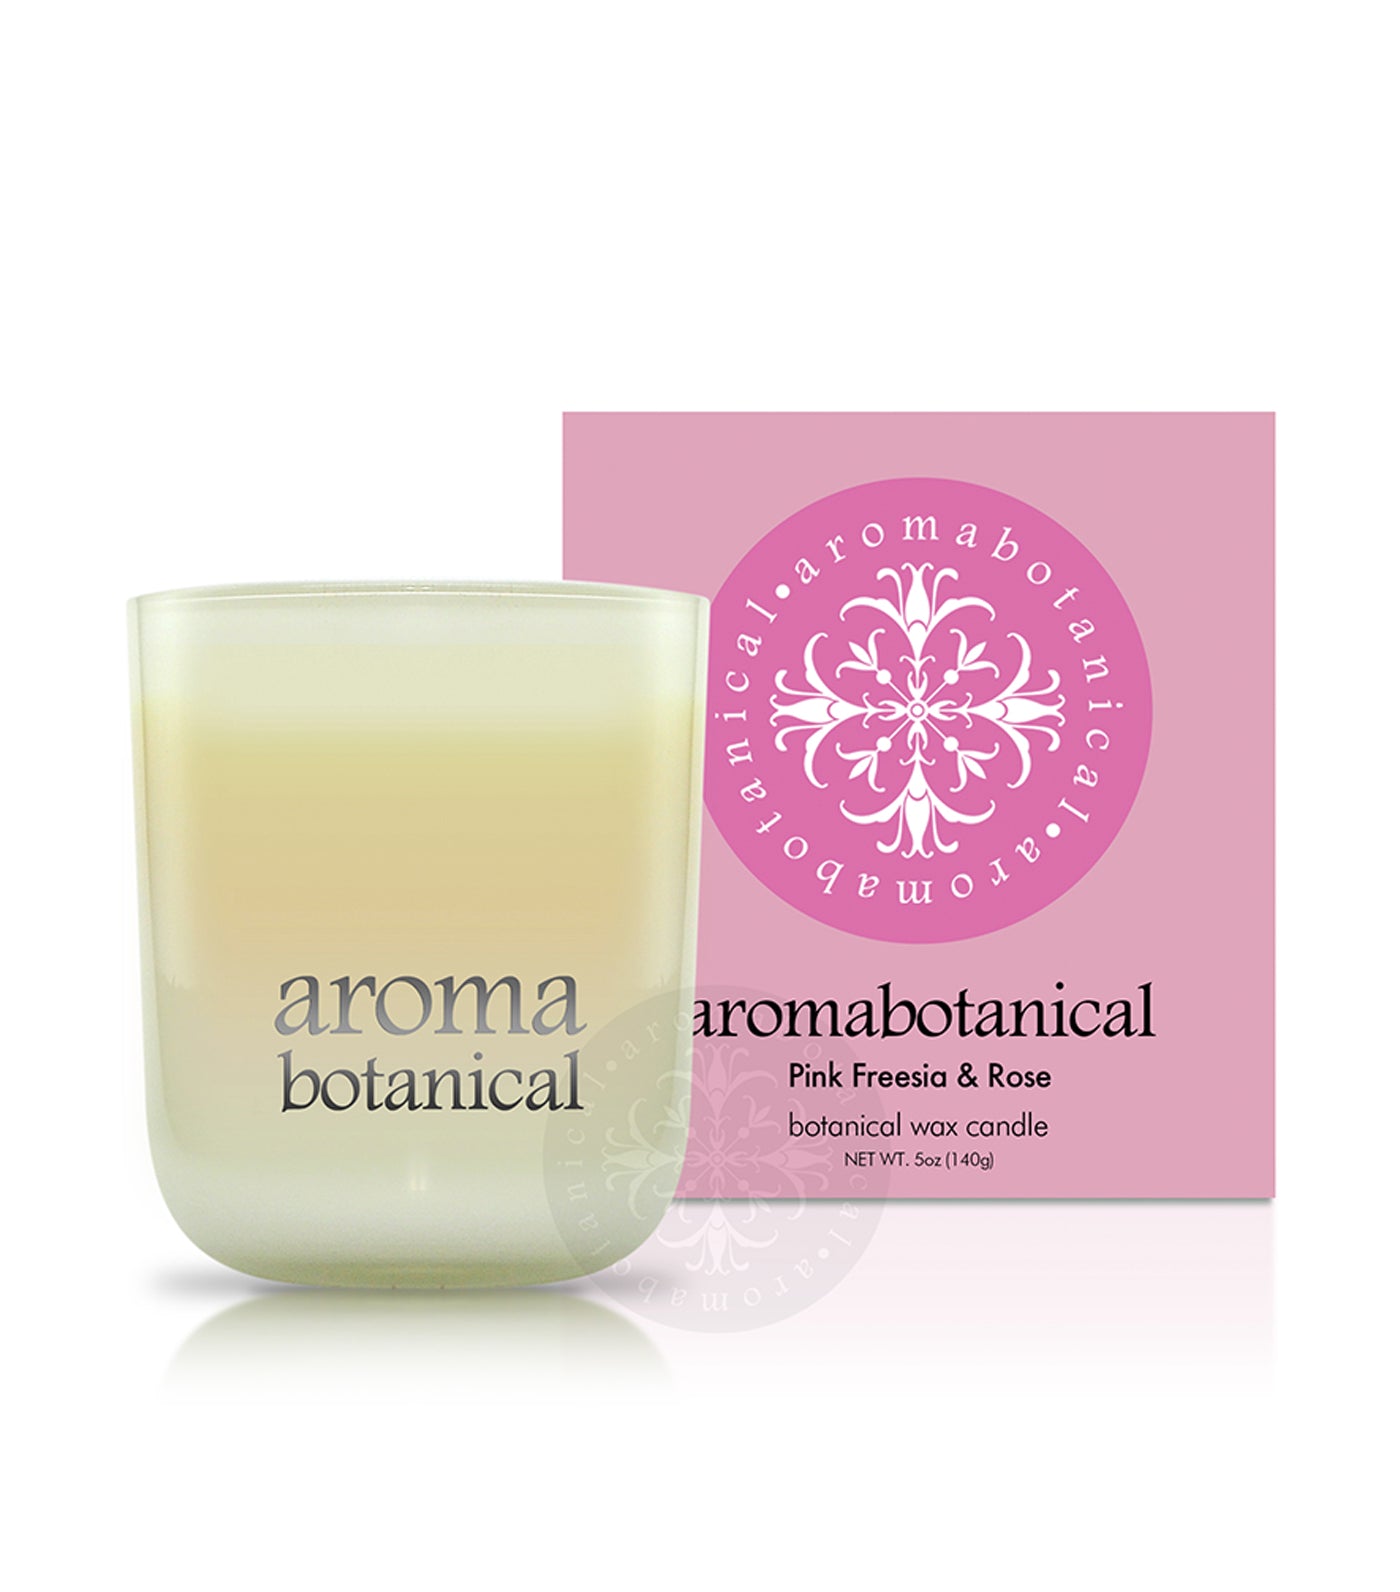 aromabotanical pink freesia & rose 140g candle